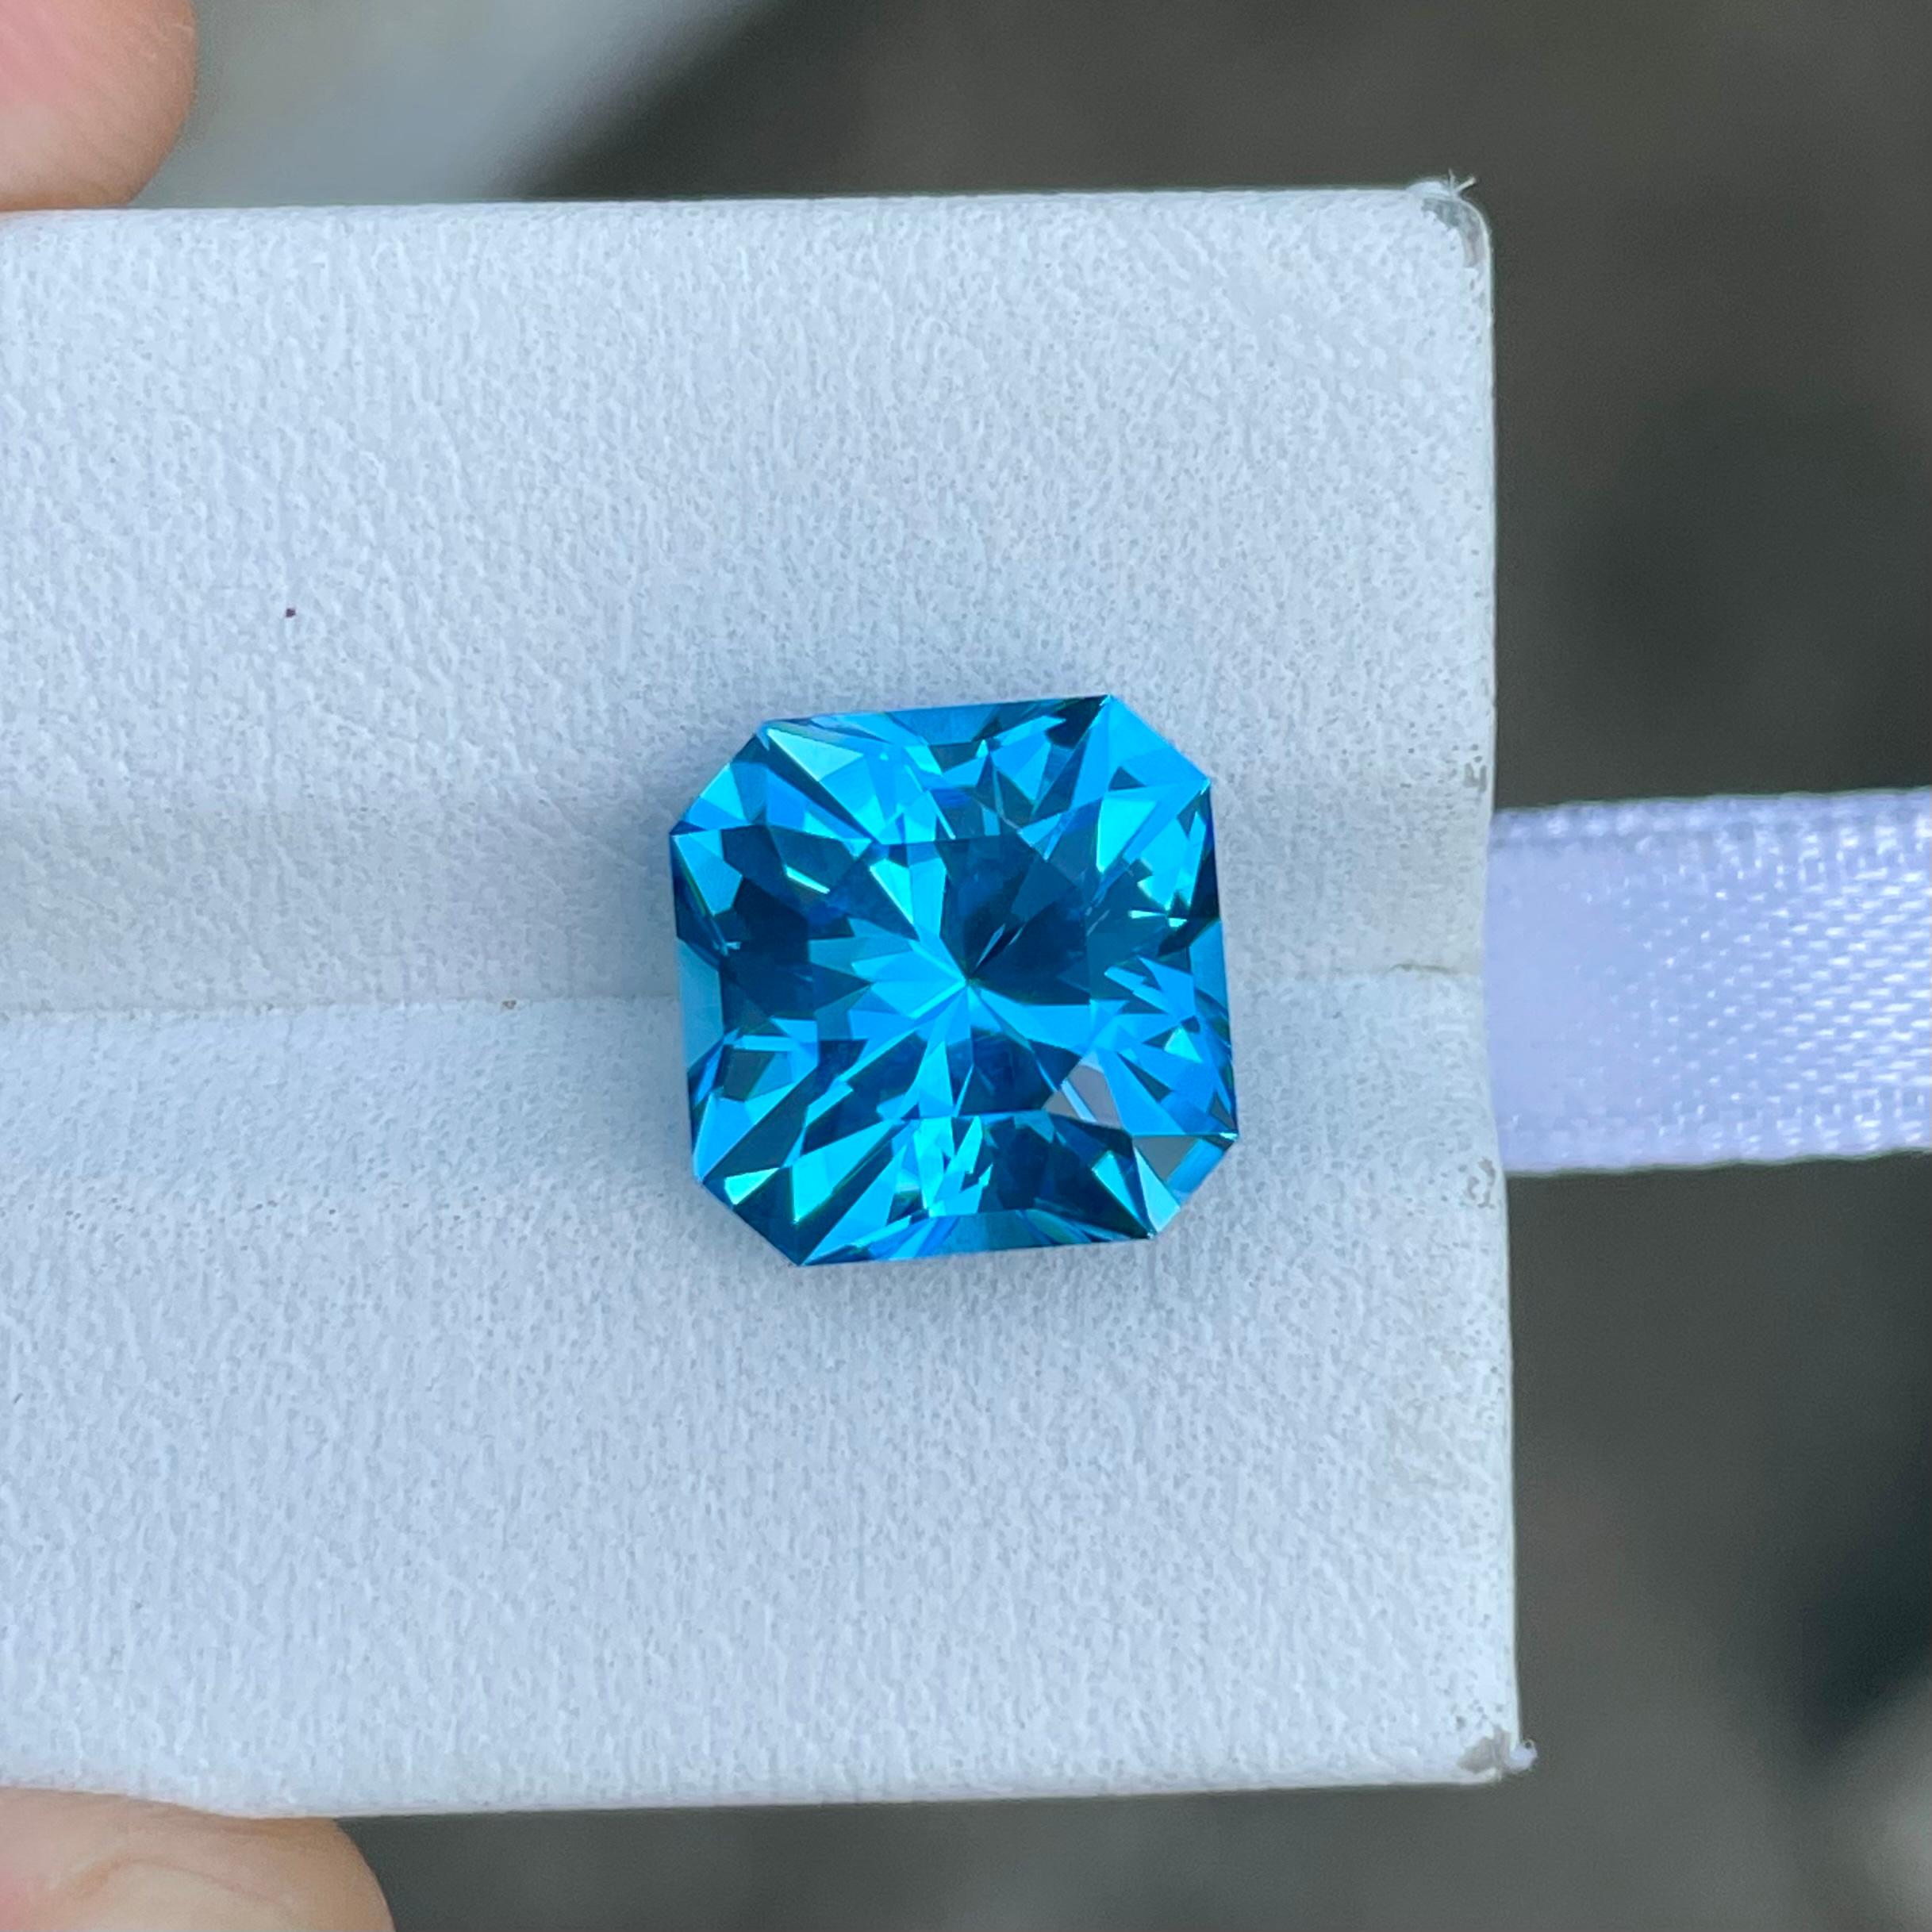 Mixed Cut Shop Neon Blue Topaz 6.85 carats Custom Precision Cut Natural Madagascar' Gem For Sale